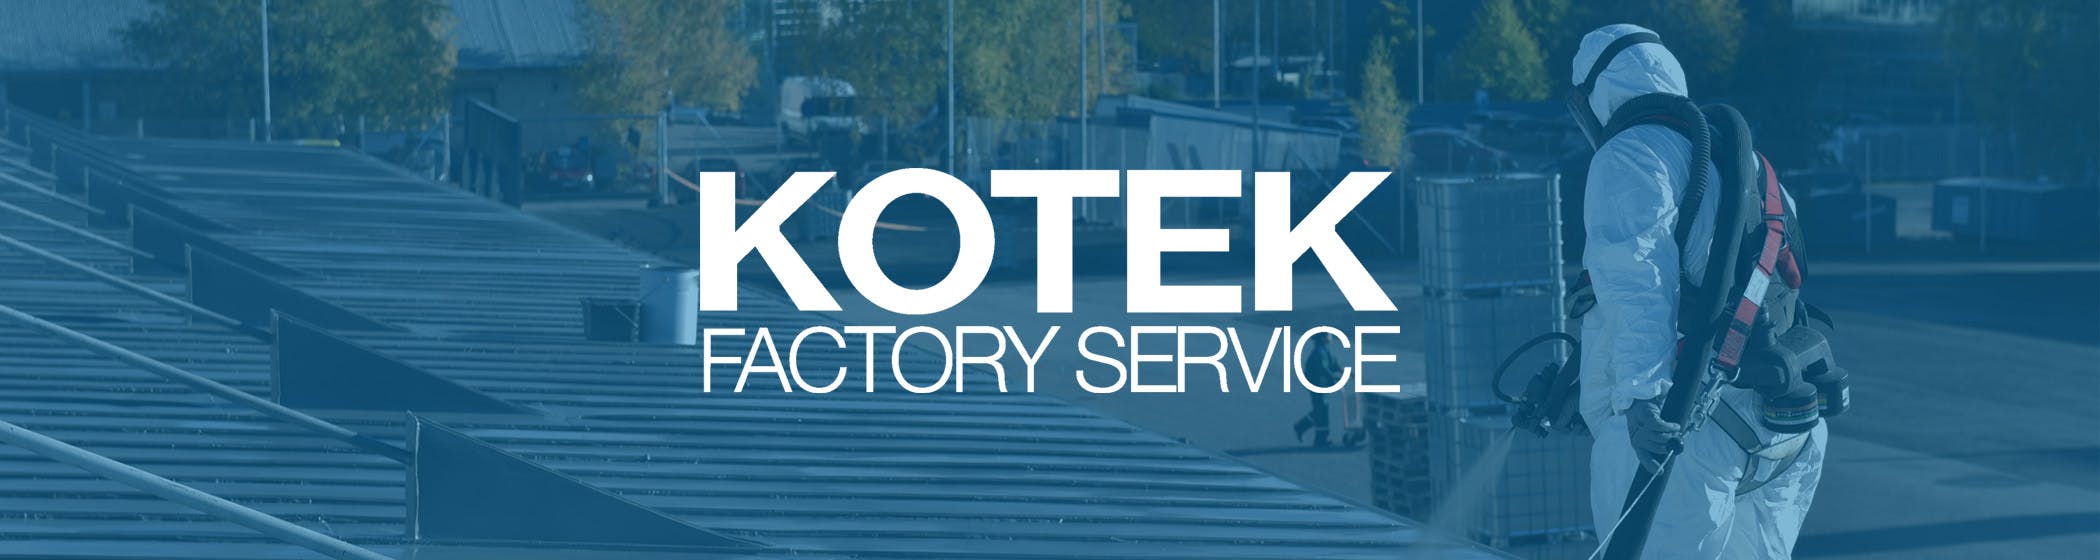 Kotek Factory Service Oy – avoimet työpaikat